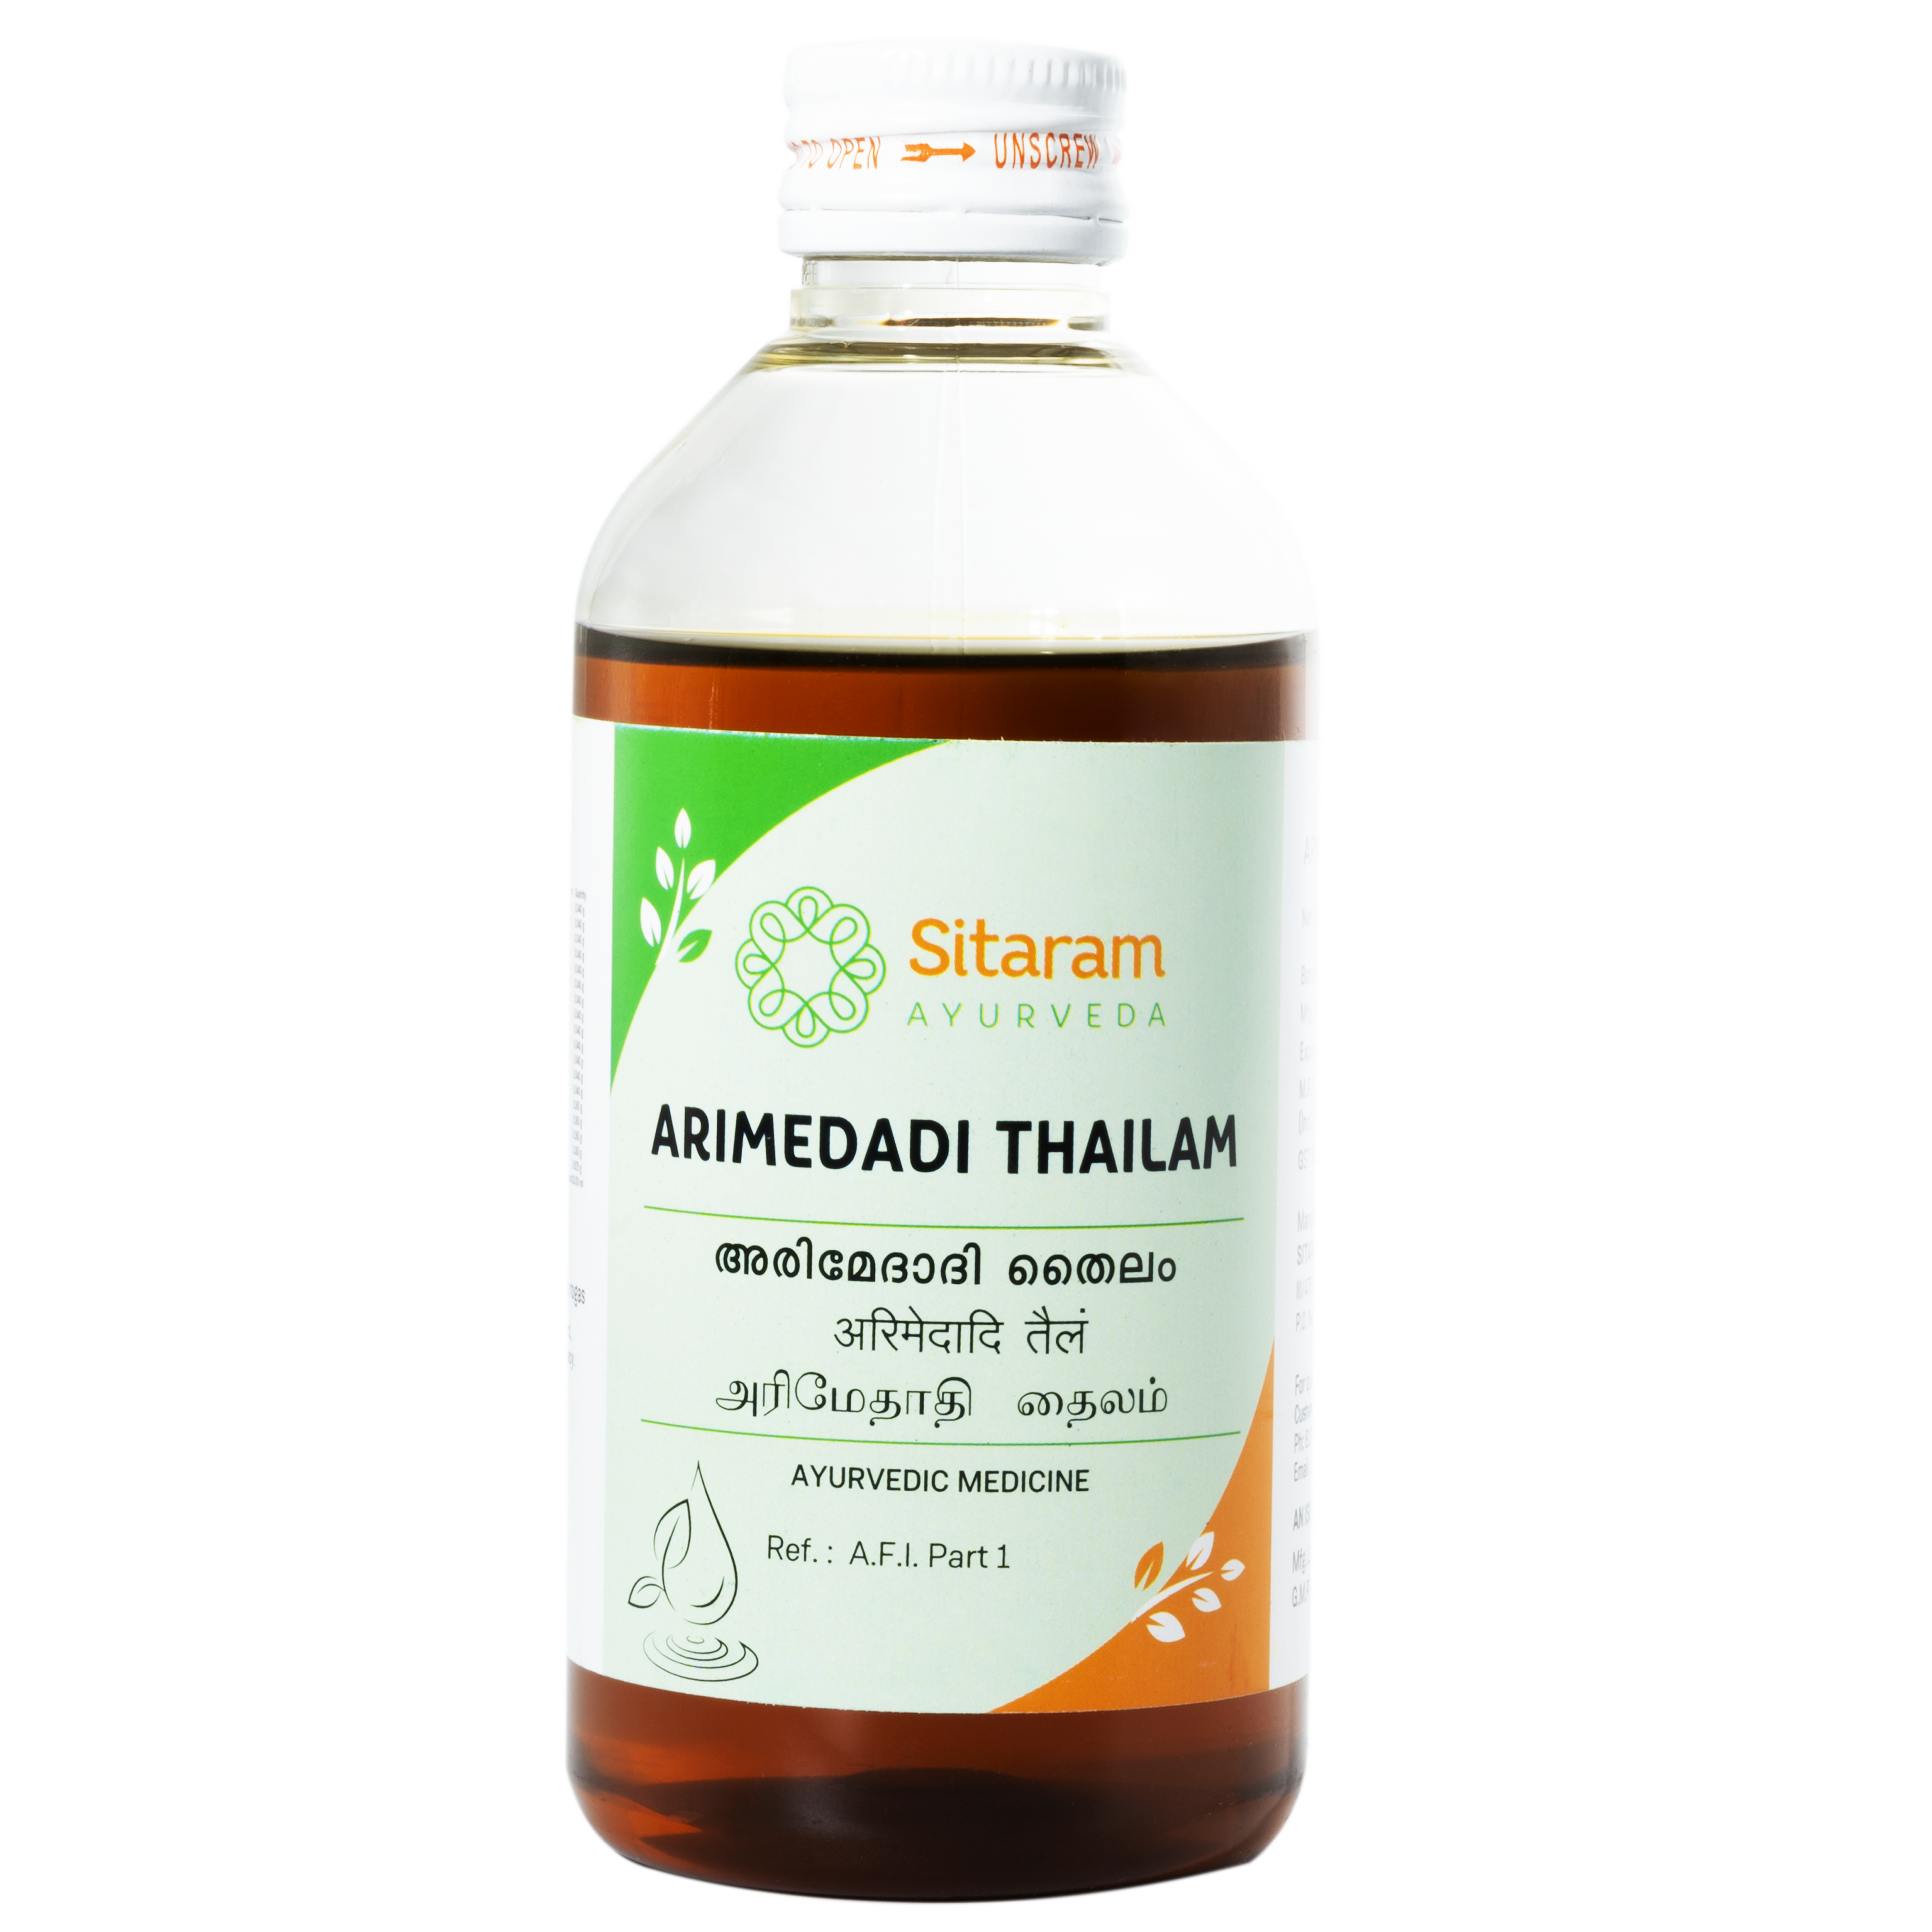 Sitaram Ayurveda Arimedadi Thailam 200 Ml - Pack of 3 (Prescription Medication)